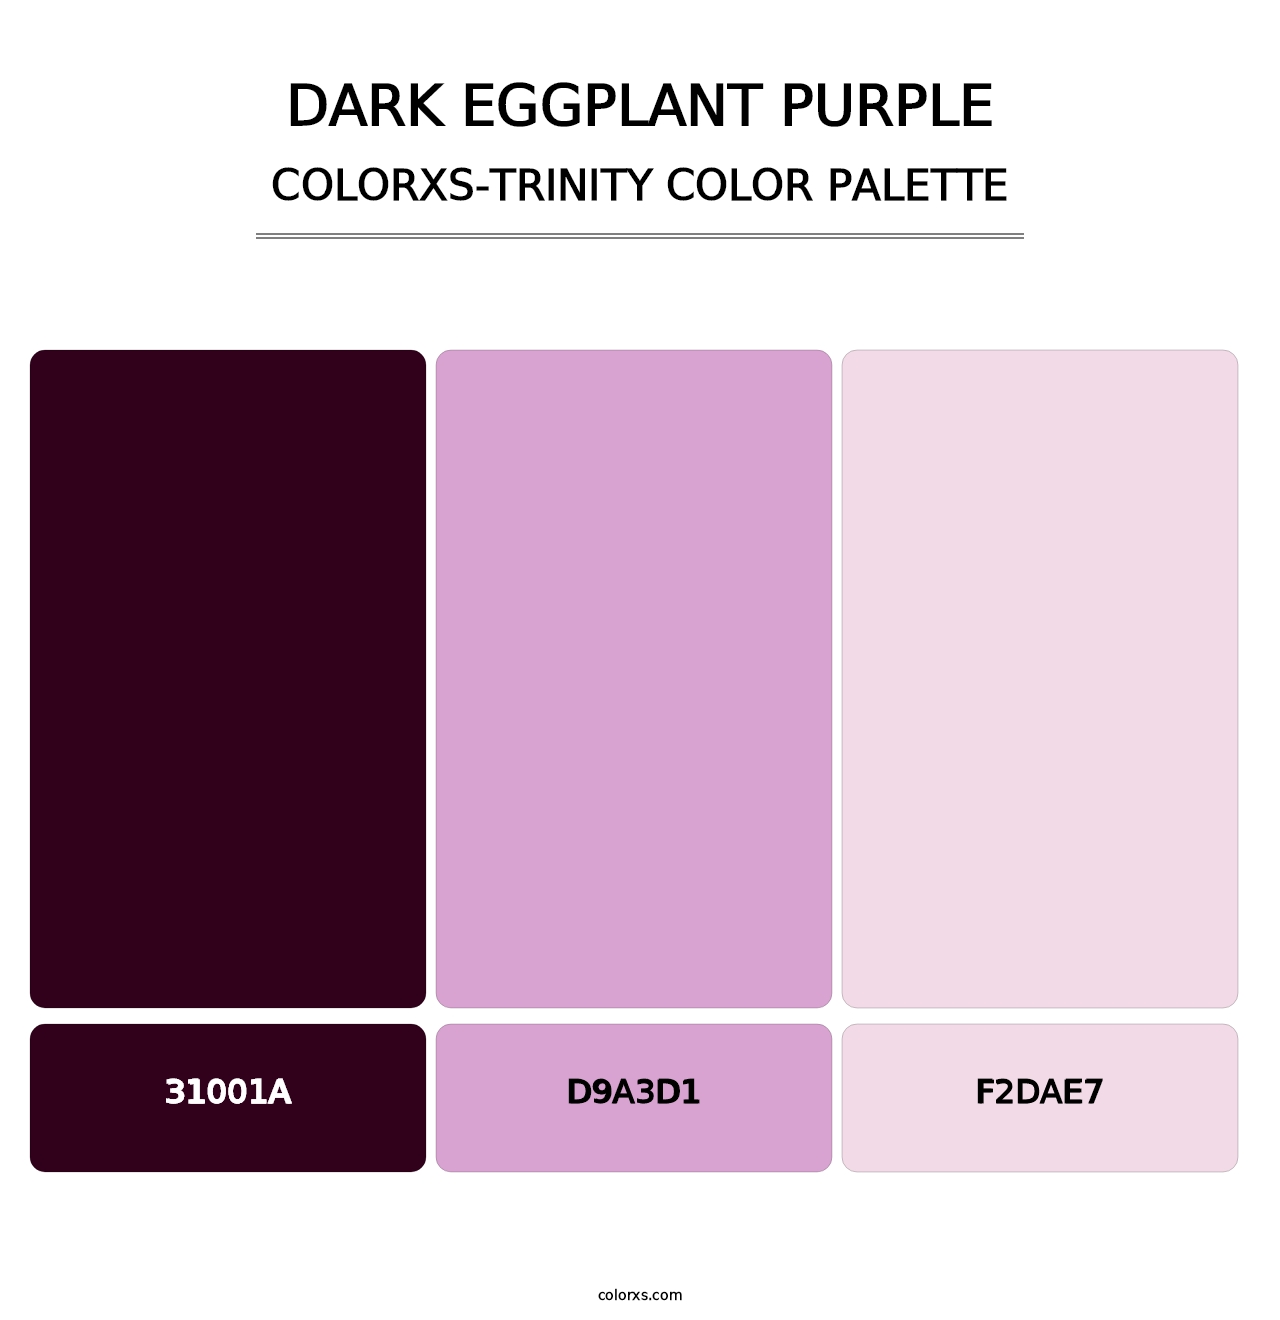 Dark Eggplant Purple - Colorxs Trinity Palette